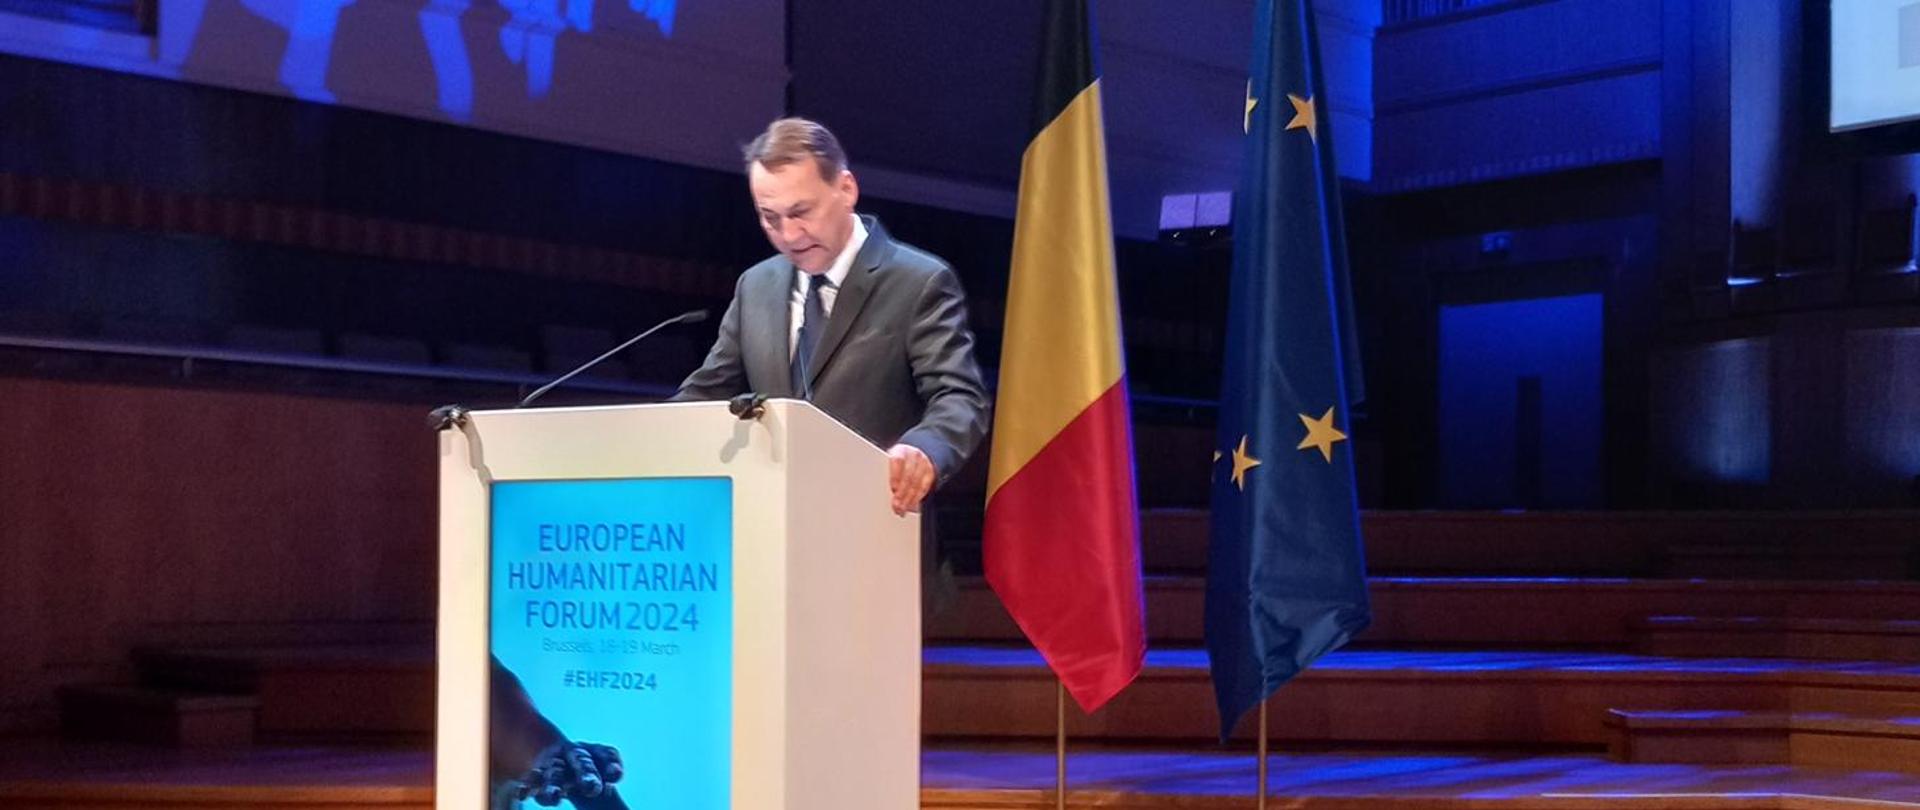 Minister Radosław Sikorski takes part in European Humanitarian Forum